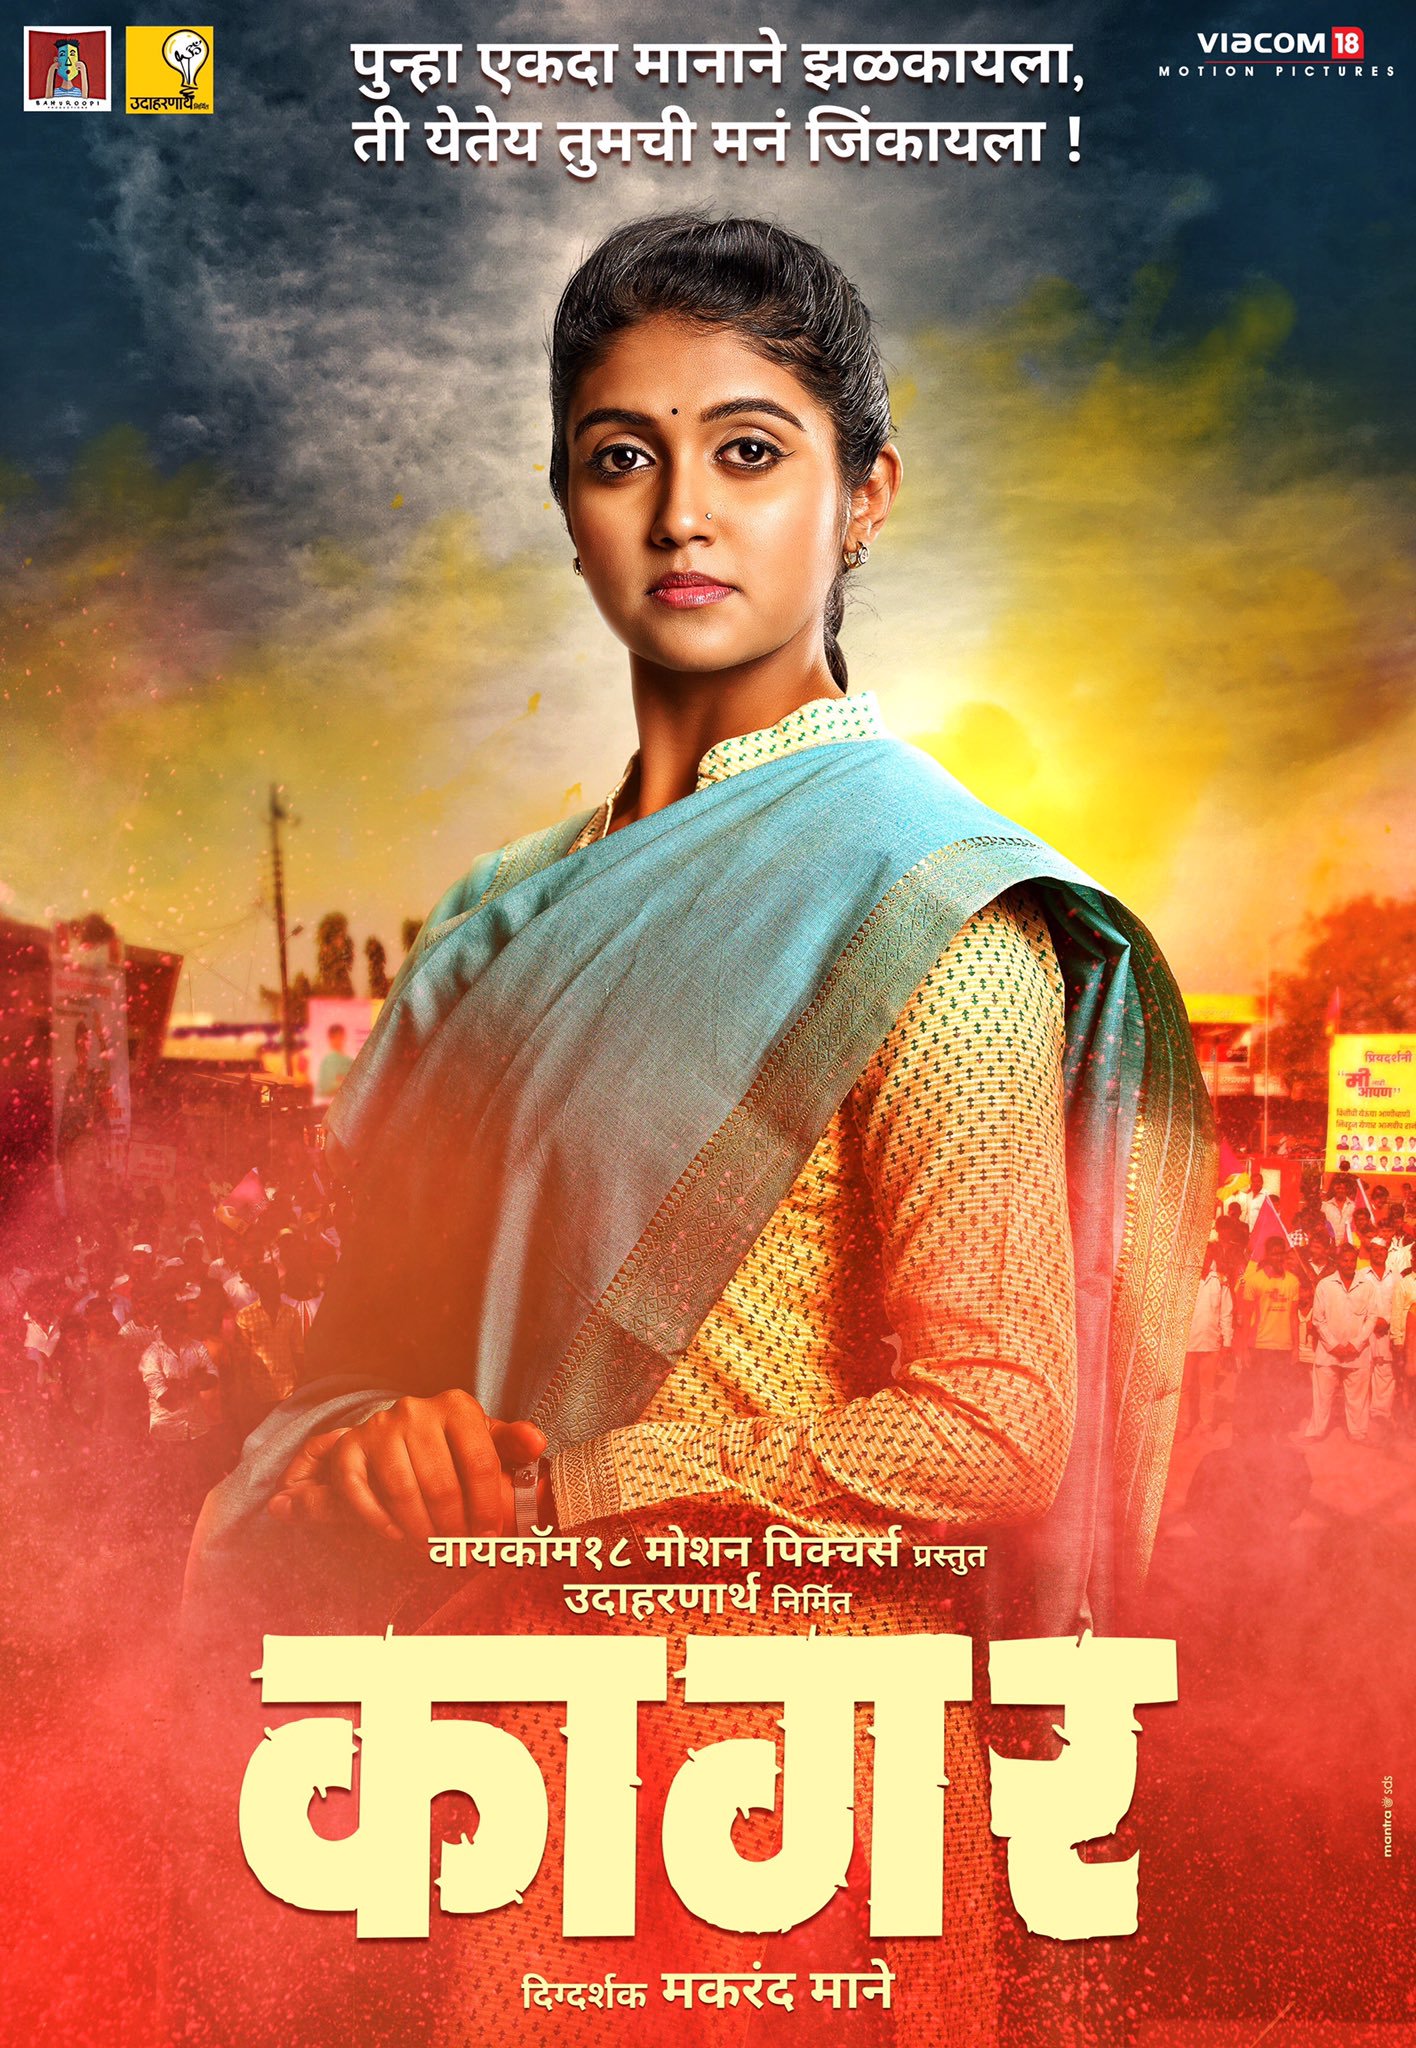 Kagar Marathi Movie Poster